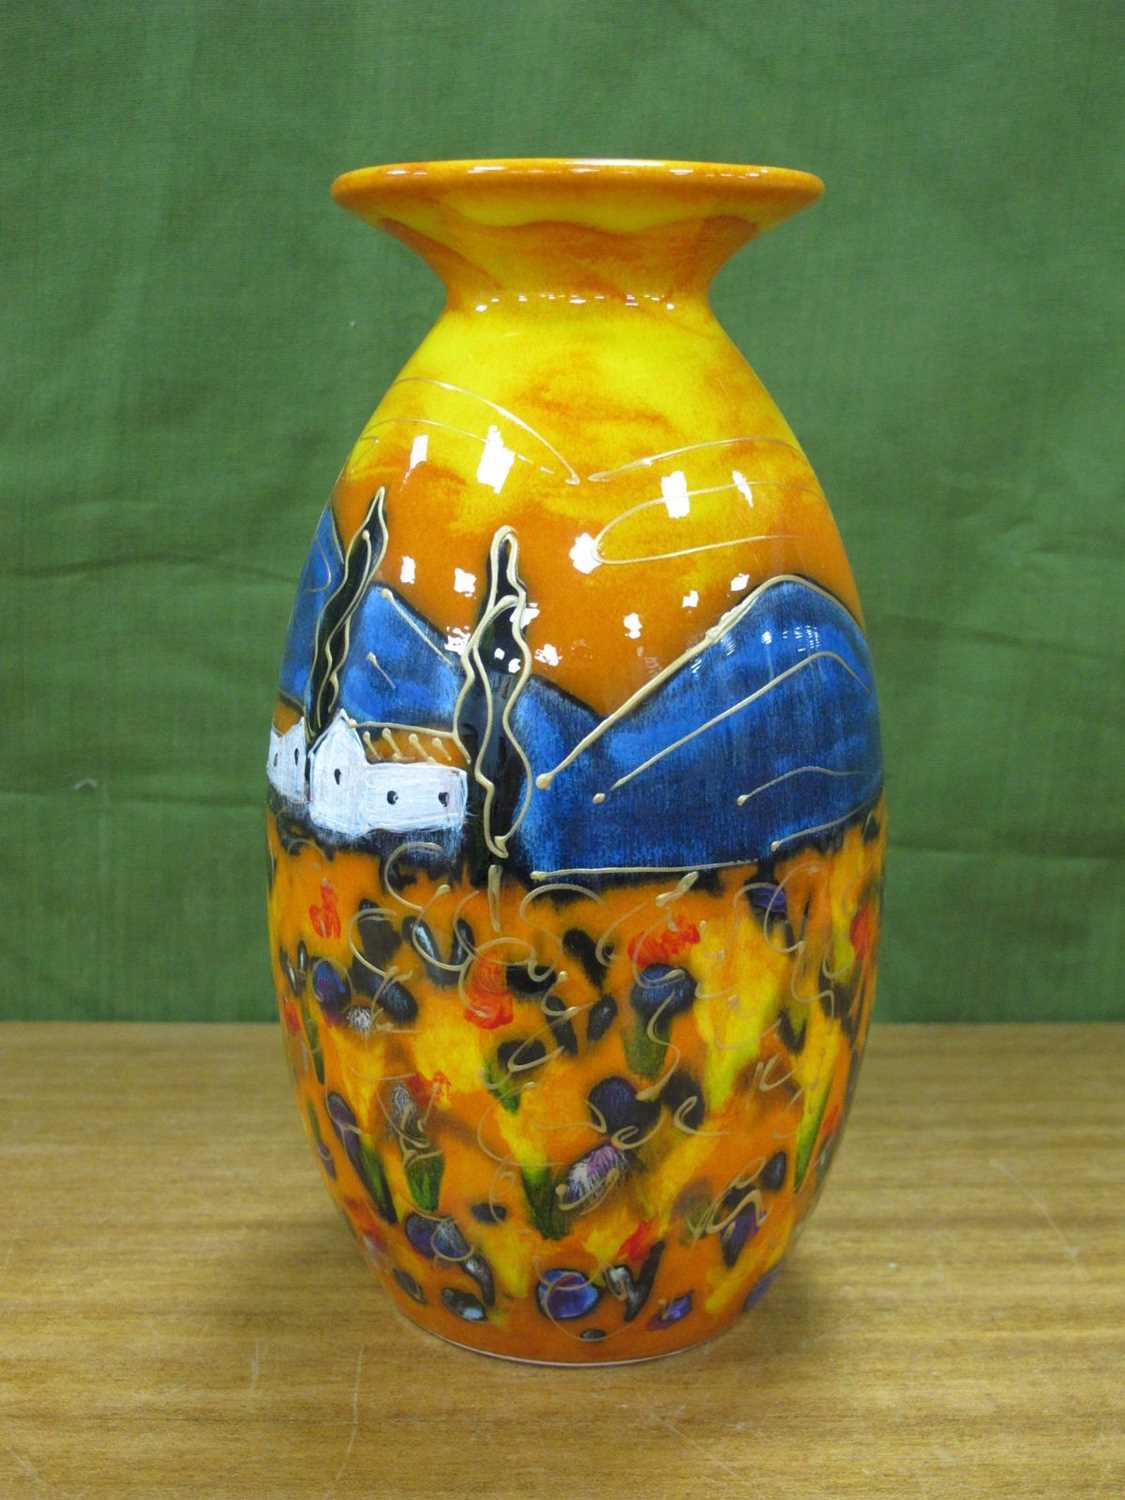 Anita Harris 'Tuscany' Minos Vase, gold signed, 20.5cm high.